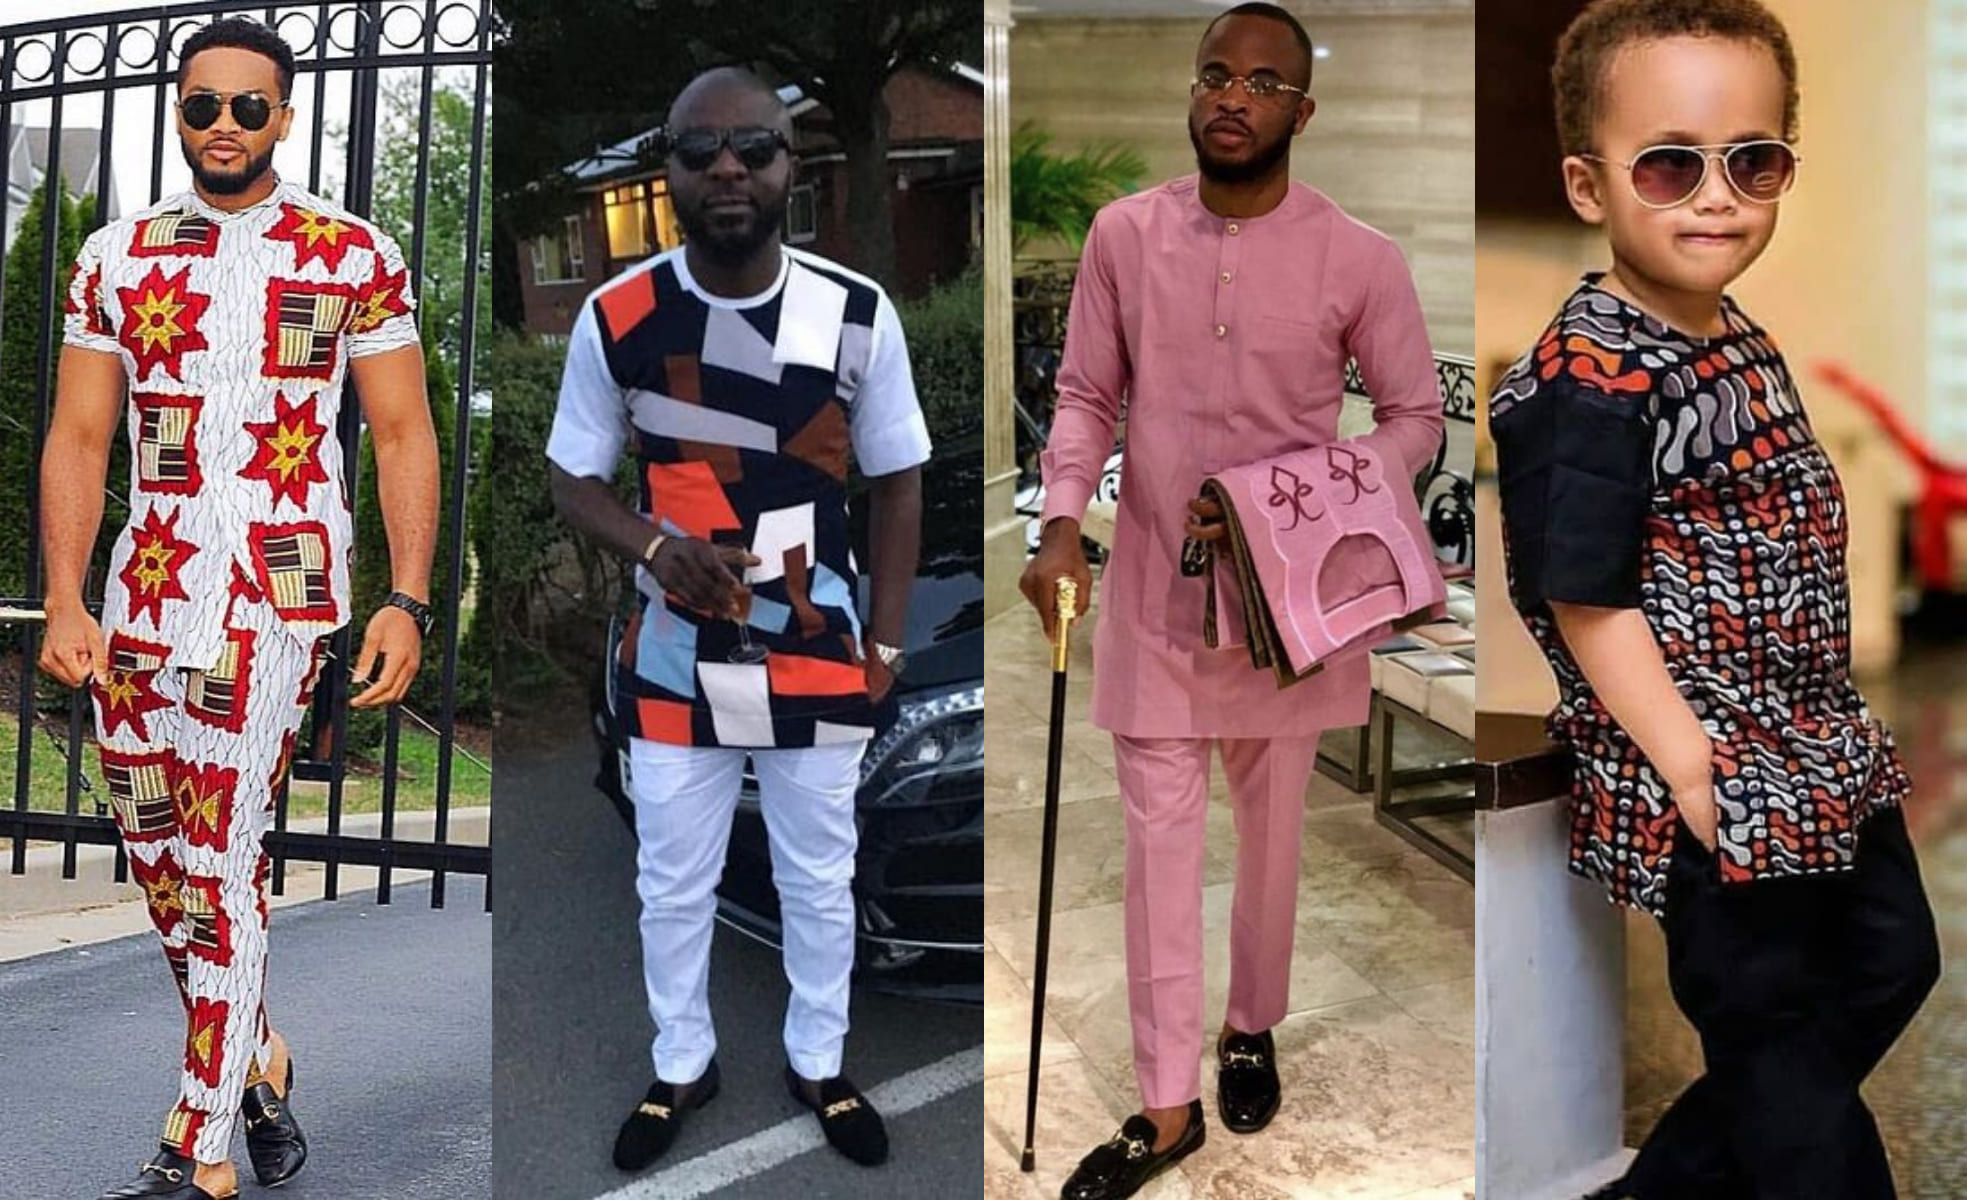 ankara styles for men 2019